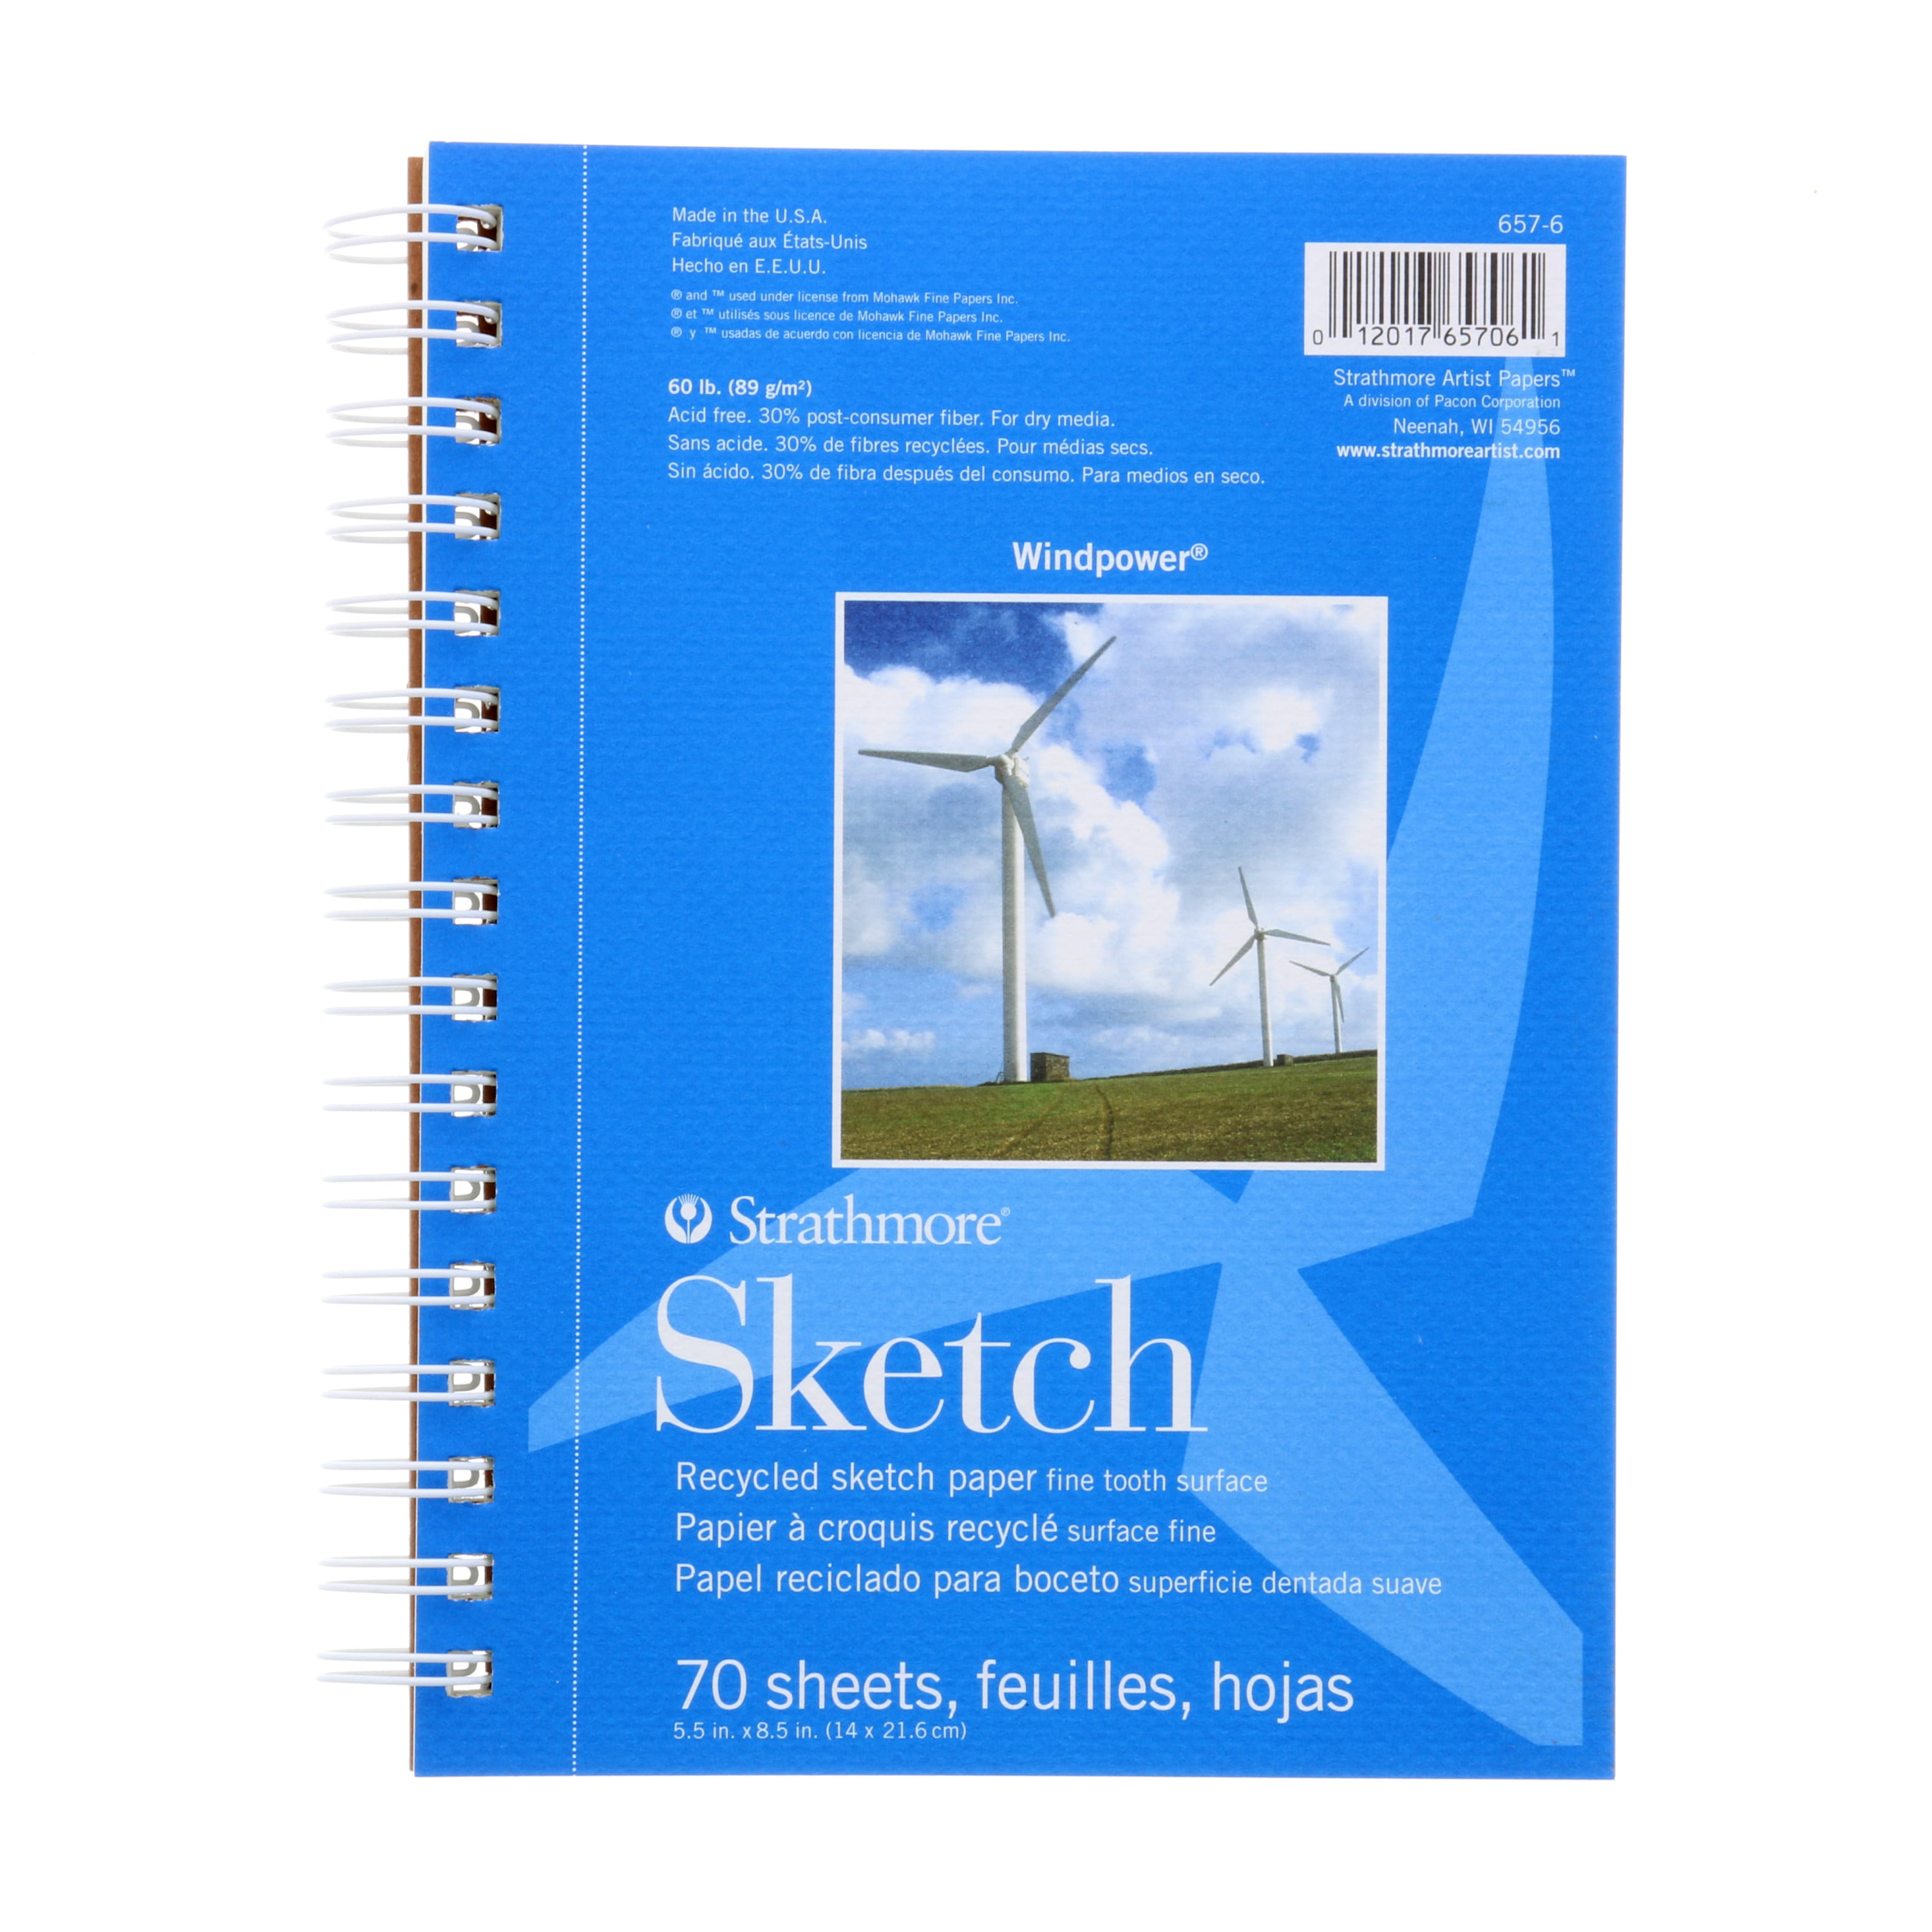 Strathmore® 400 Series Sketch Paper Pad